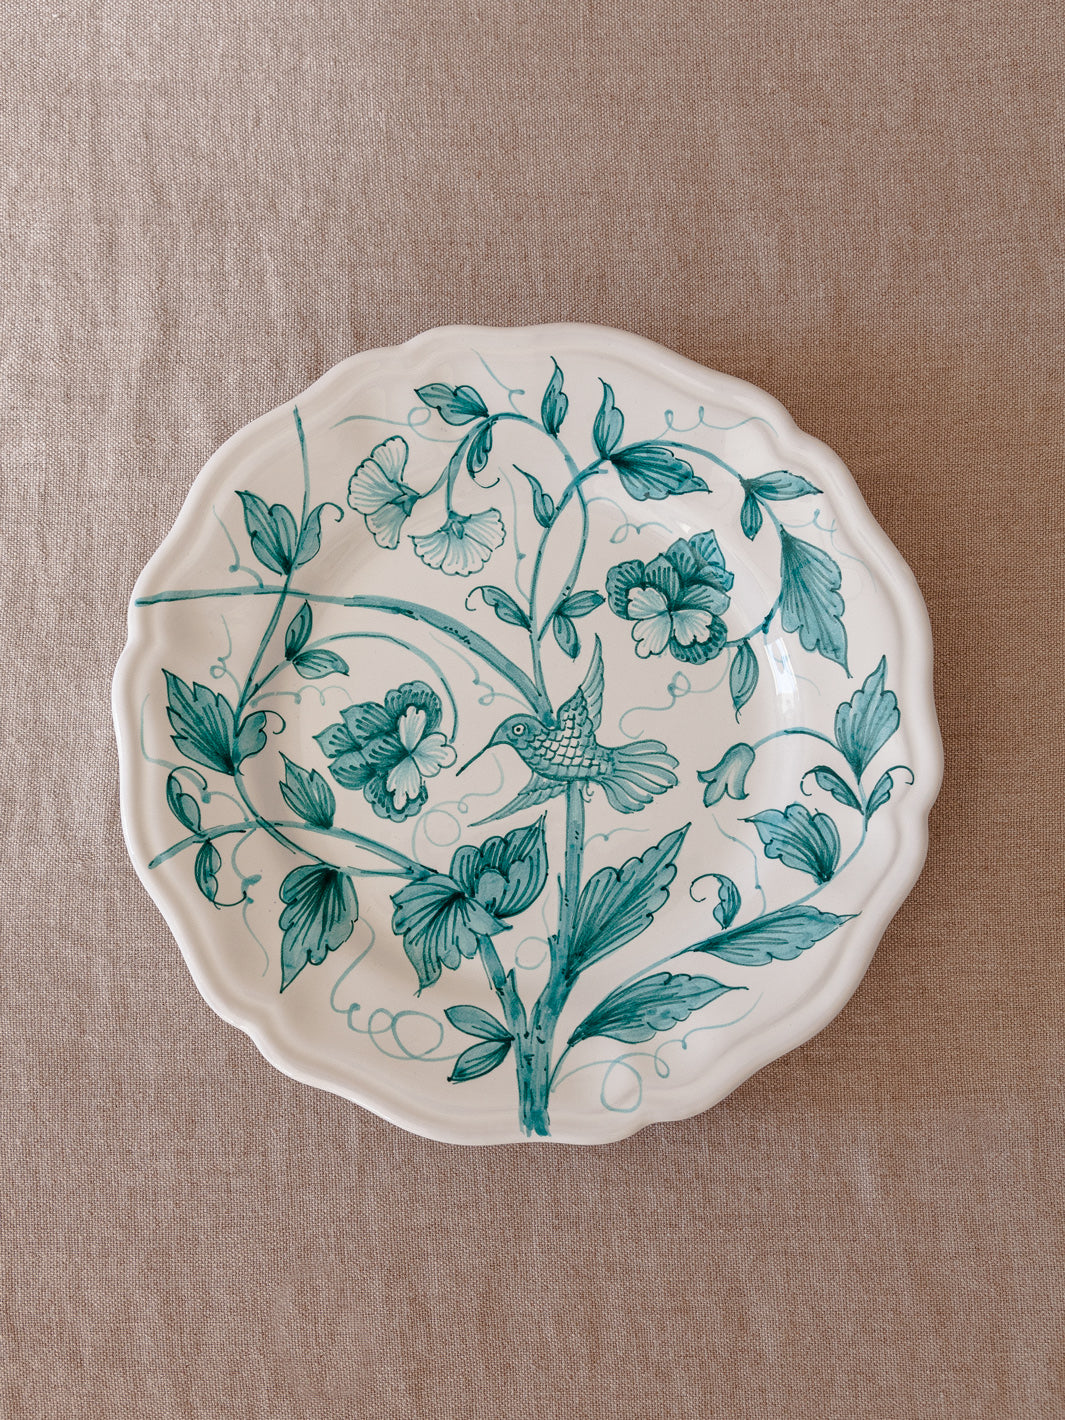 Ceramic plate "Bird" blue hand painted